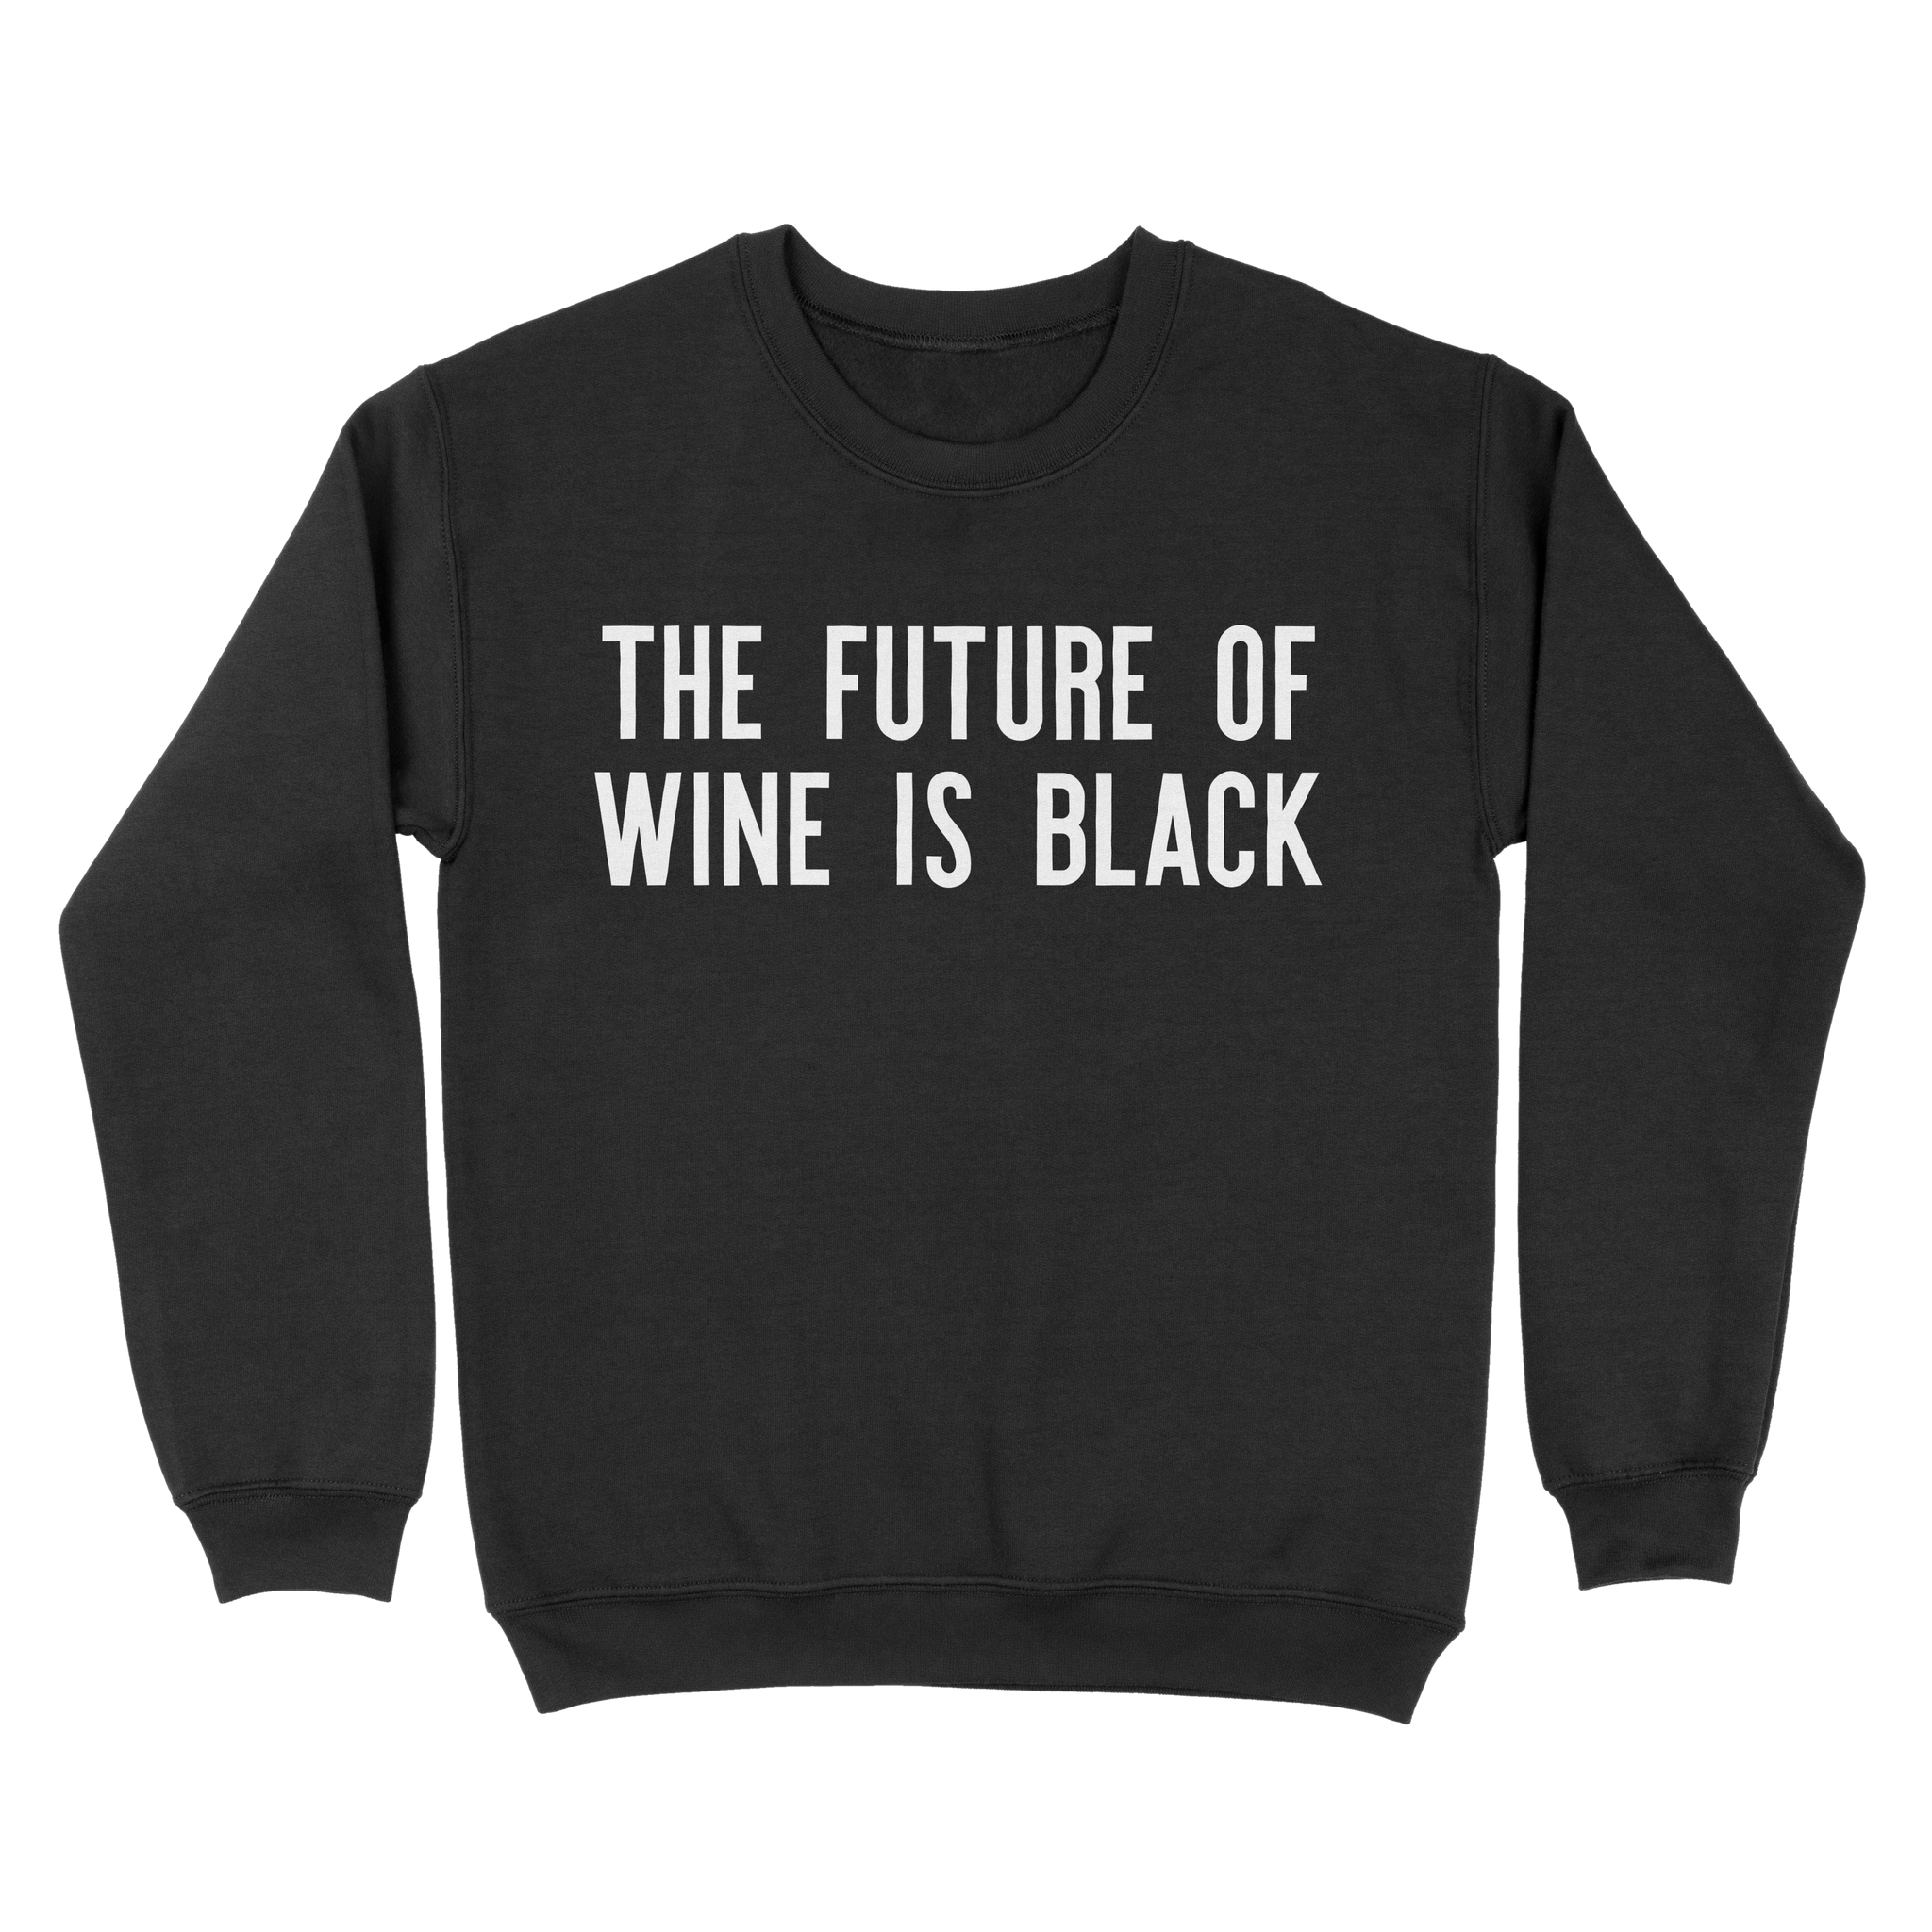 The Future of Wine is Black Sweatshirt